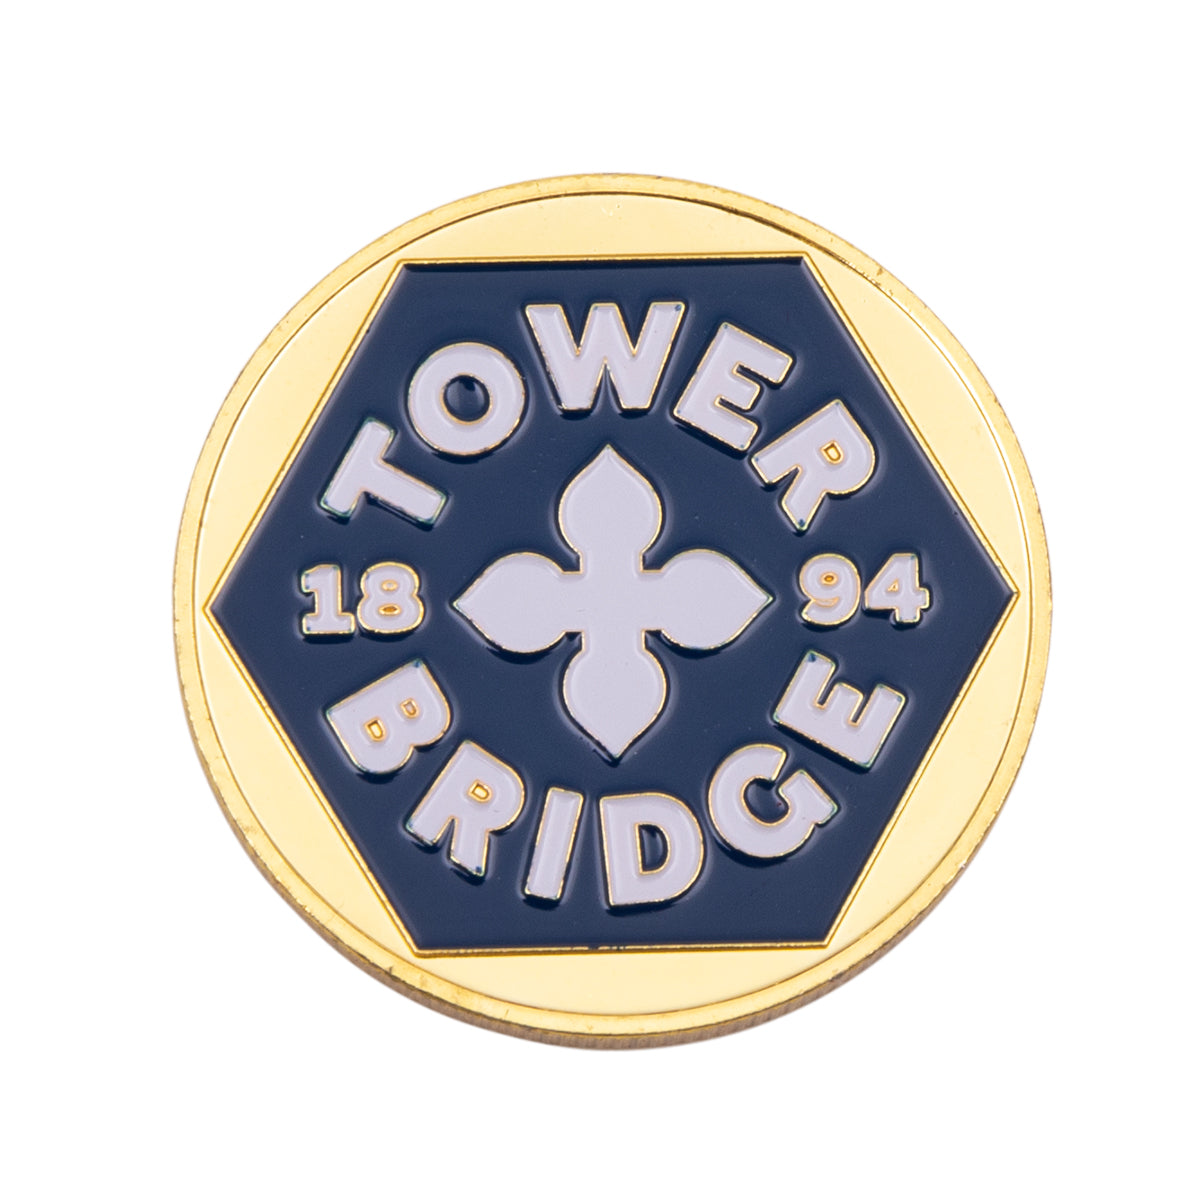 Tower Bridge Gold Medal Coin 2